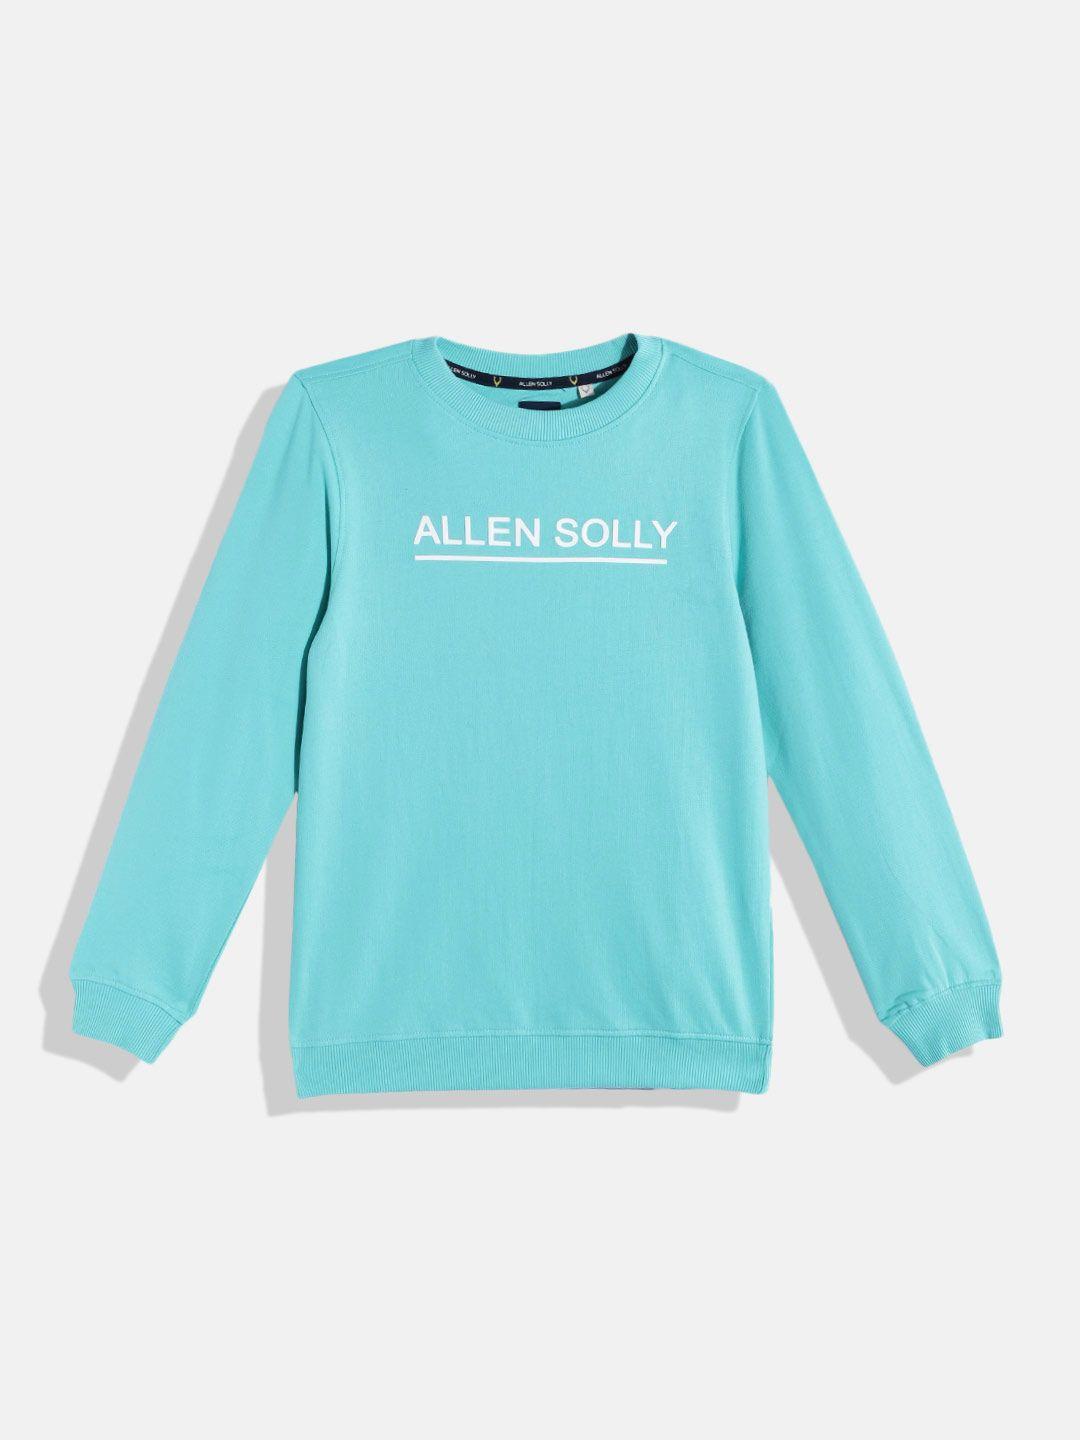 allen solly junior boys turquoise blue brand logo print pure cotton sweatshirt